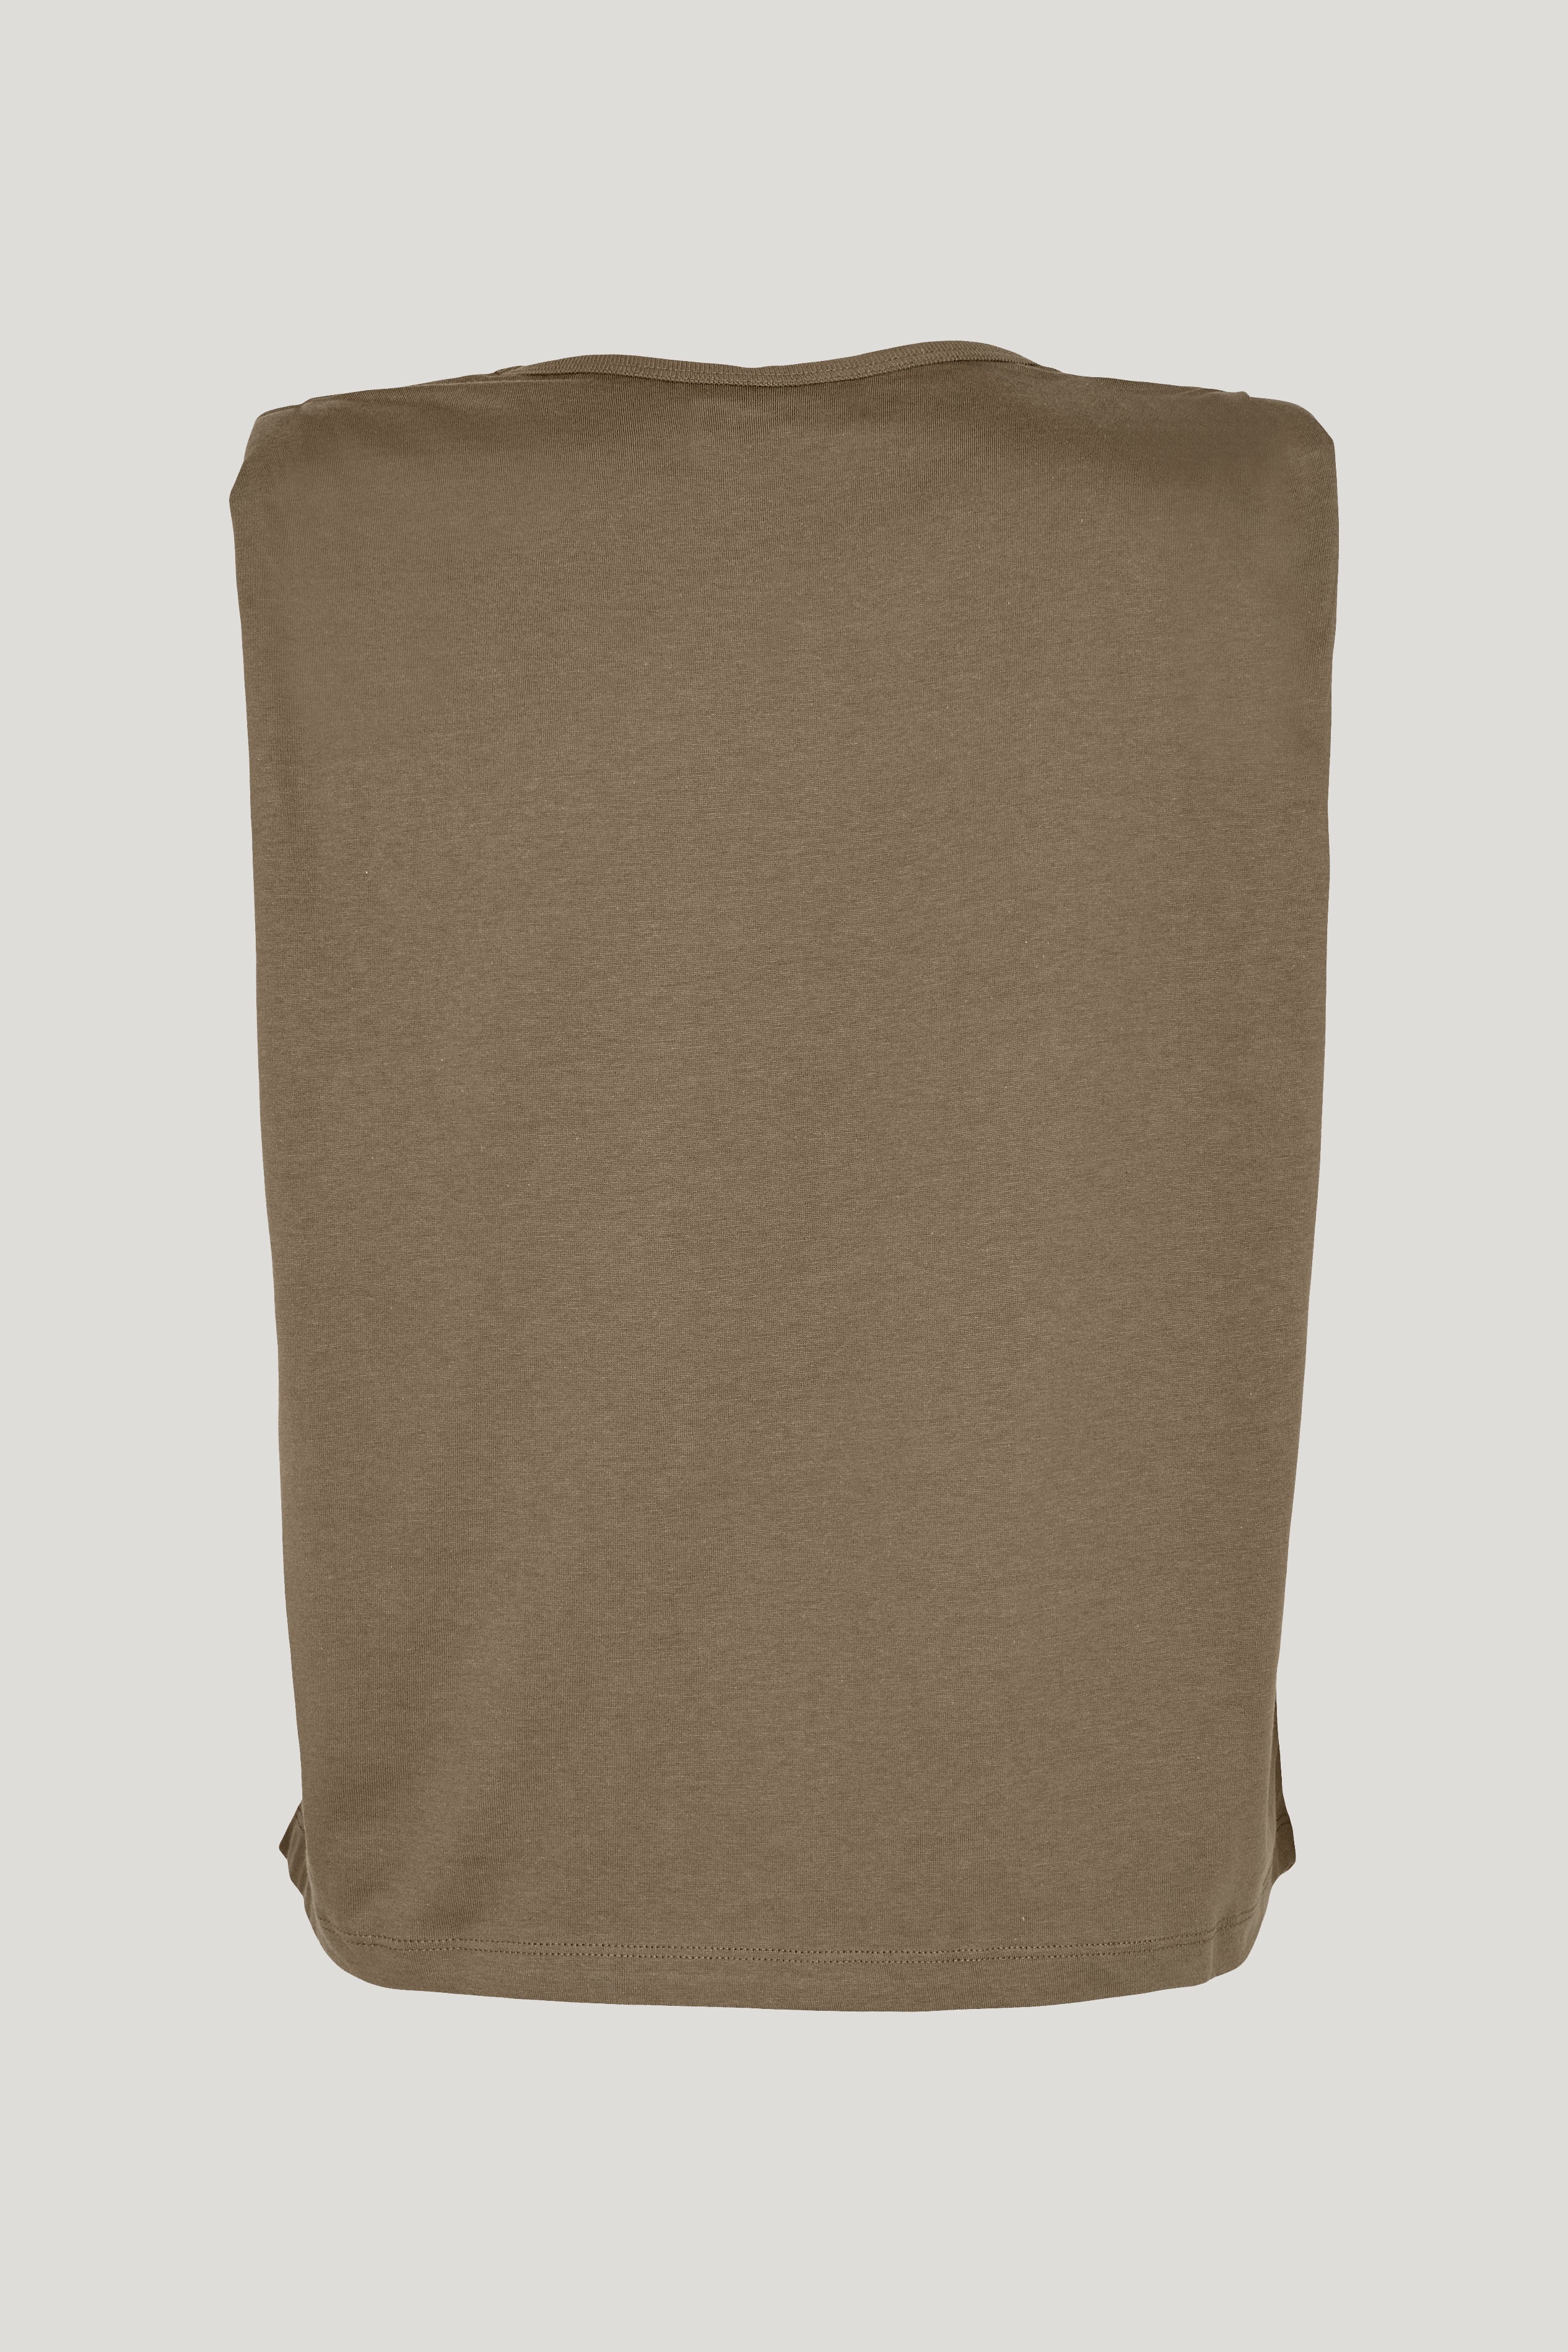 Tomorrow TD Casual Shoulder Pad Tank Tops & T-shirts Woodchip Brown